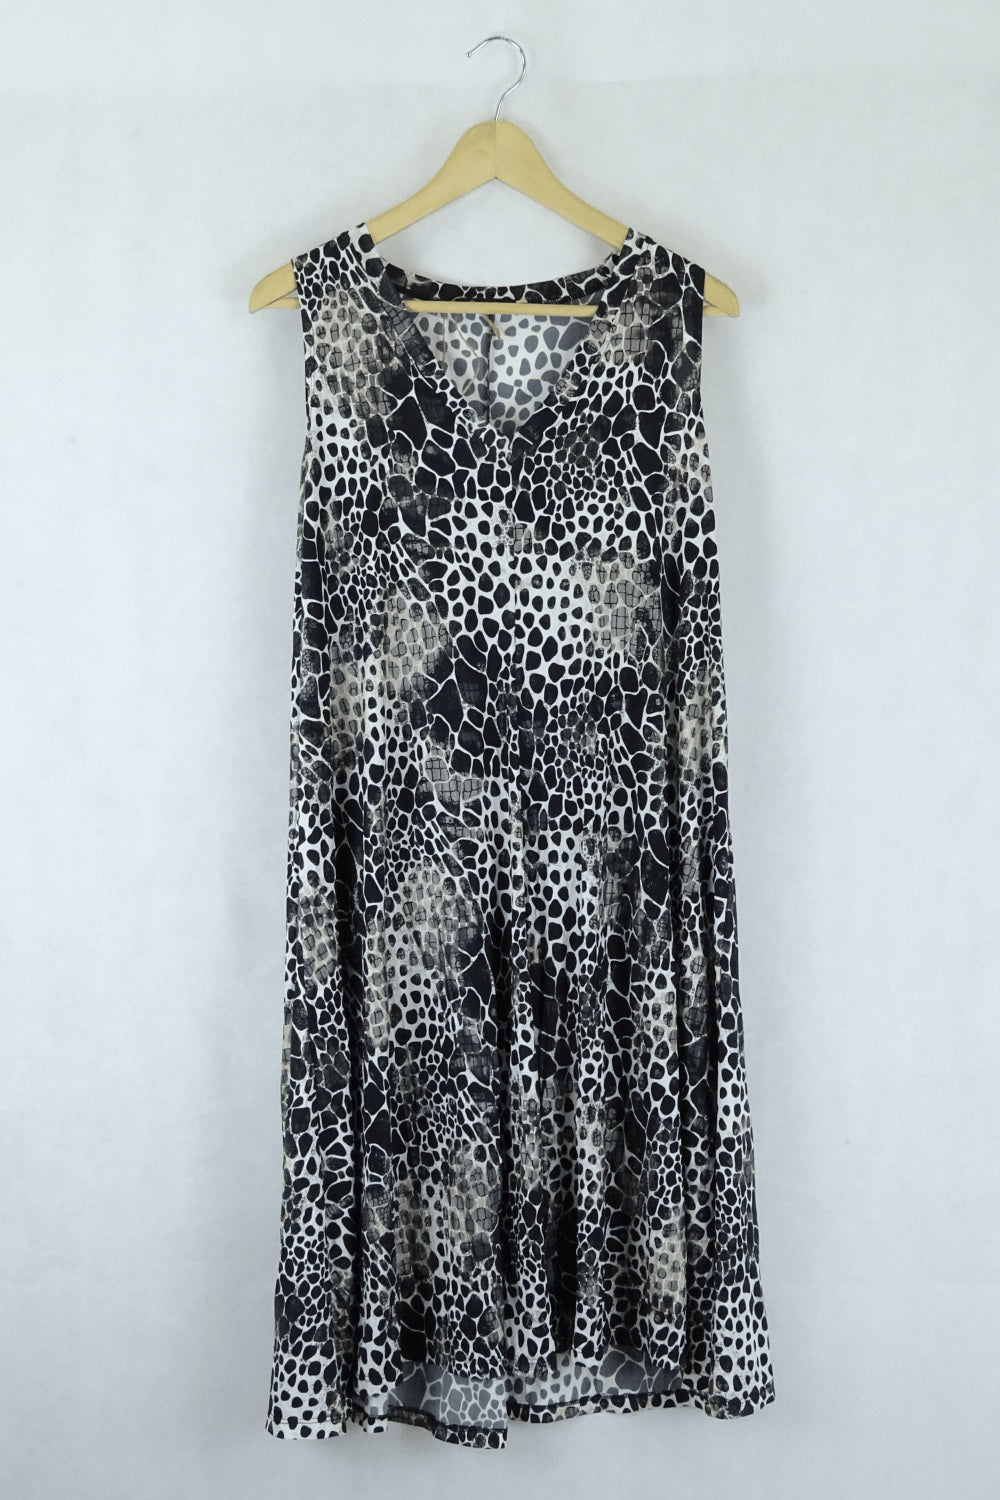 Lior Animal Printed Dress Xl